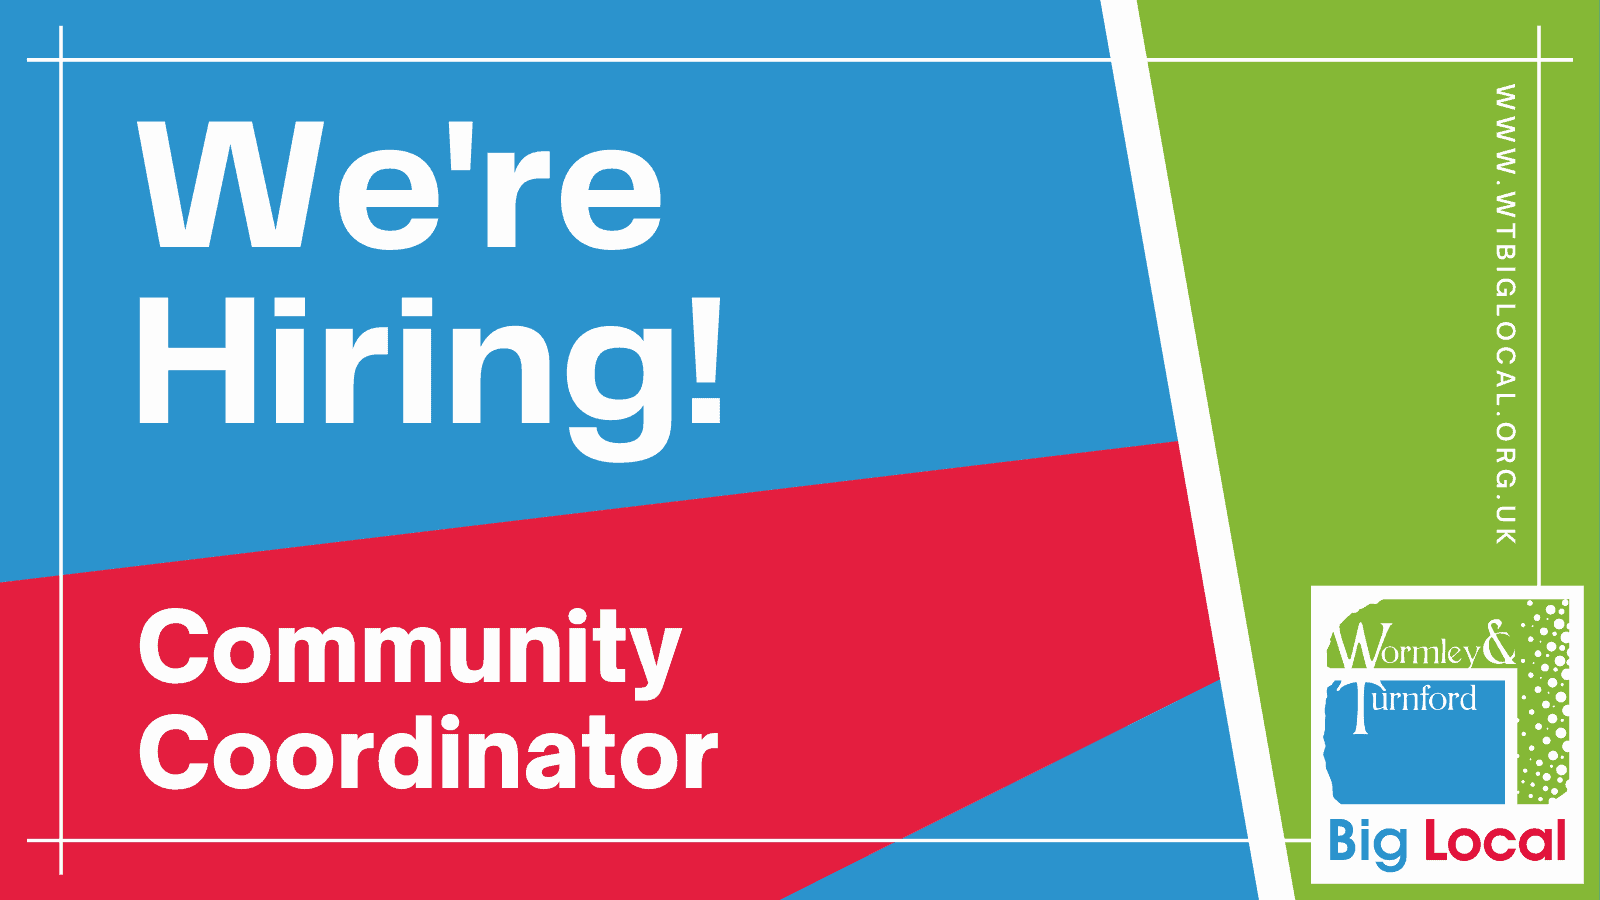 We're hiring! Community Coordinator